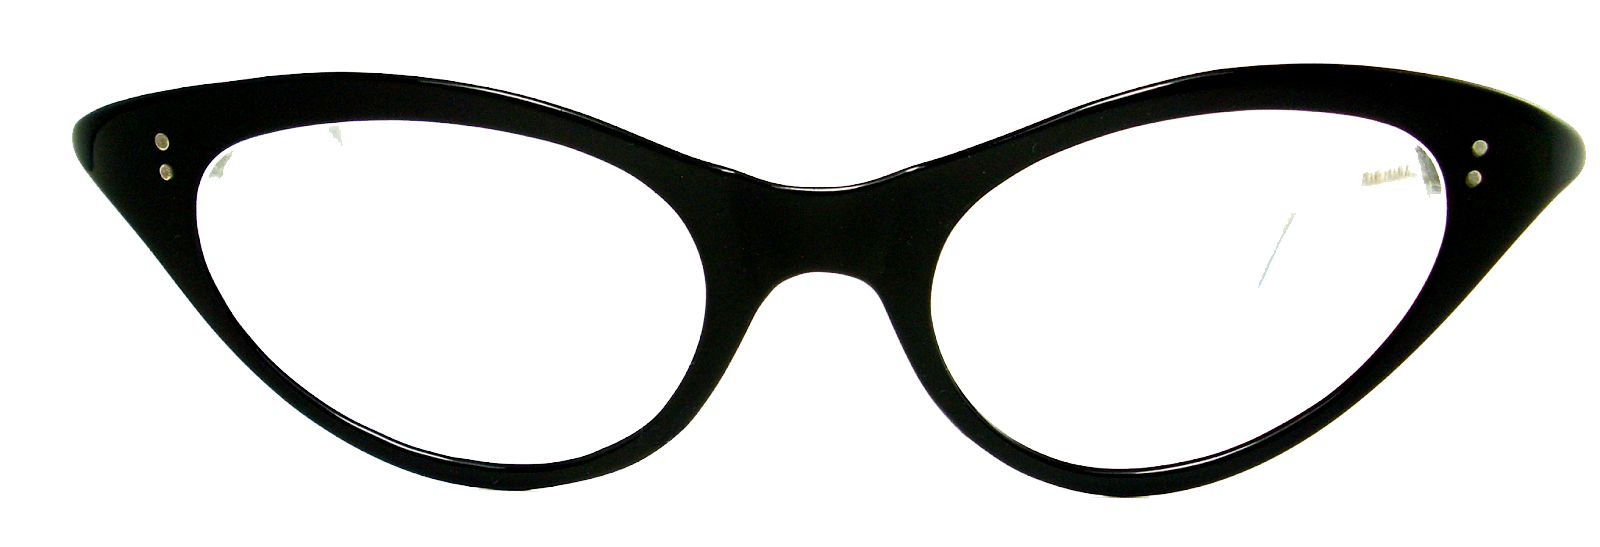 Eyeglasses clipart theme.  s cat eye